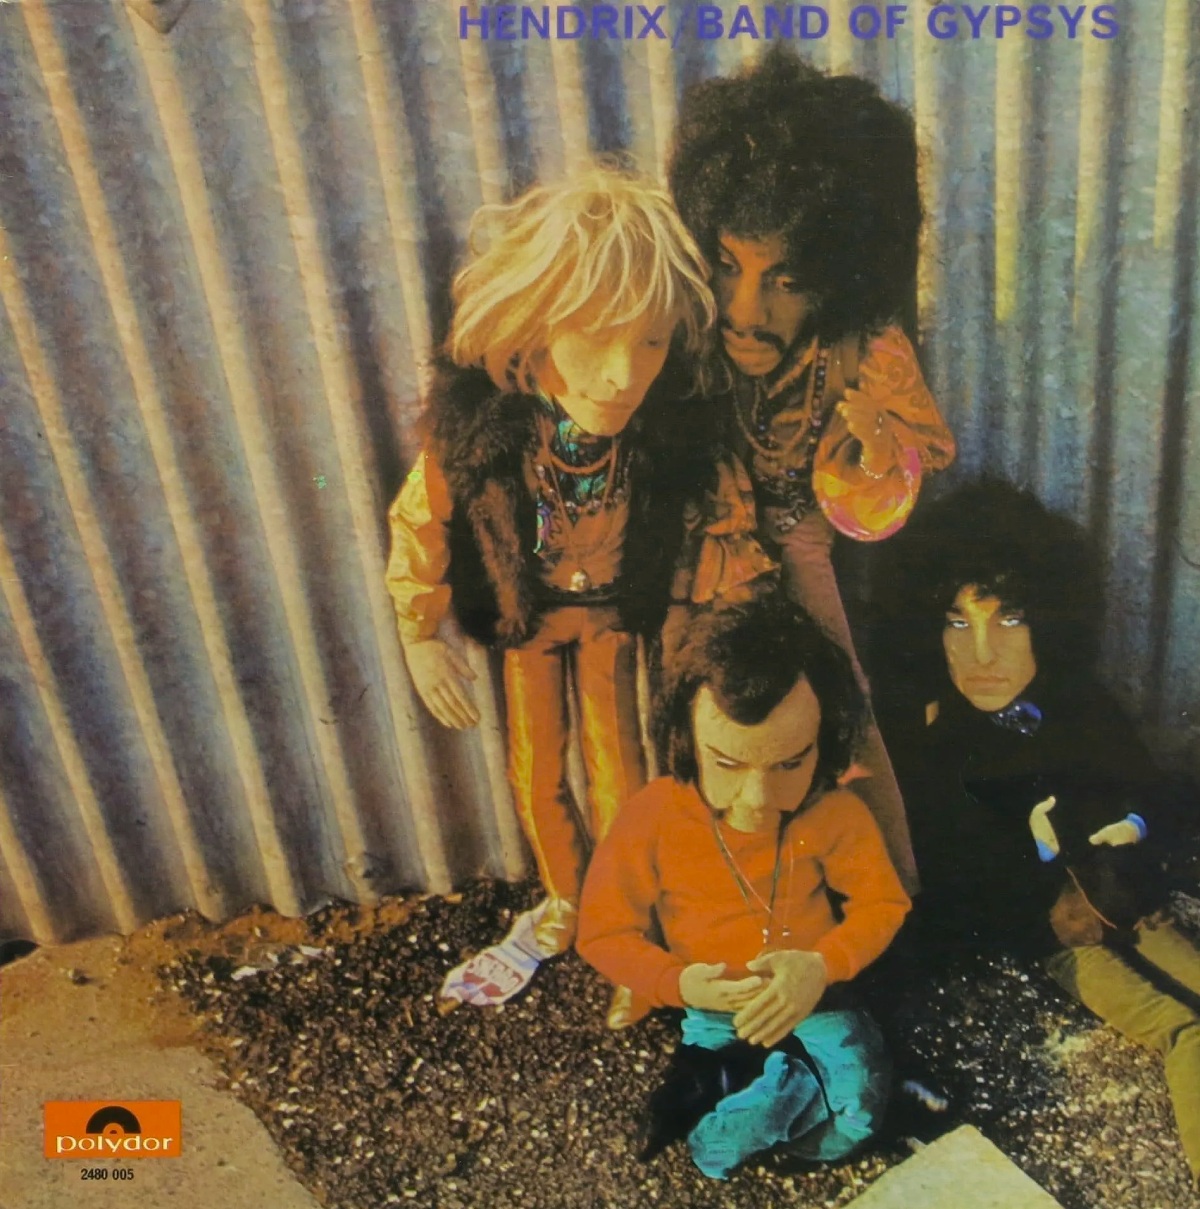 Alternative Version des Band of Gypsys-Albumcovers von Jimi Hendrix